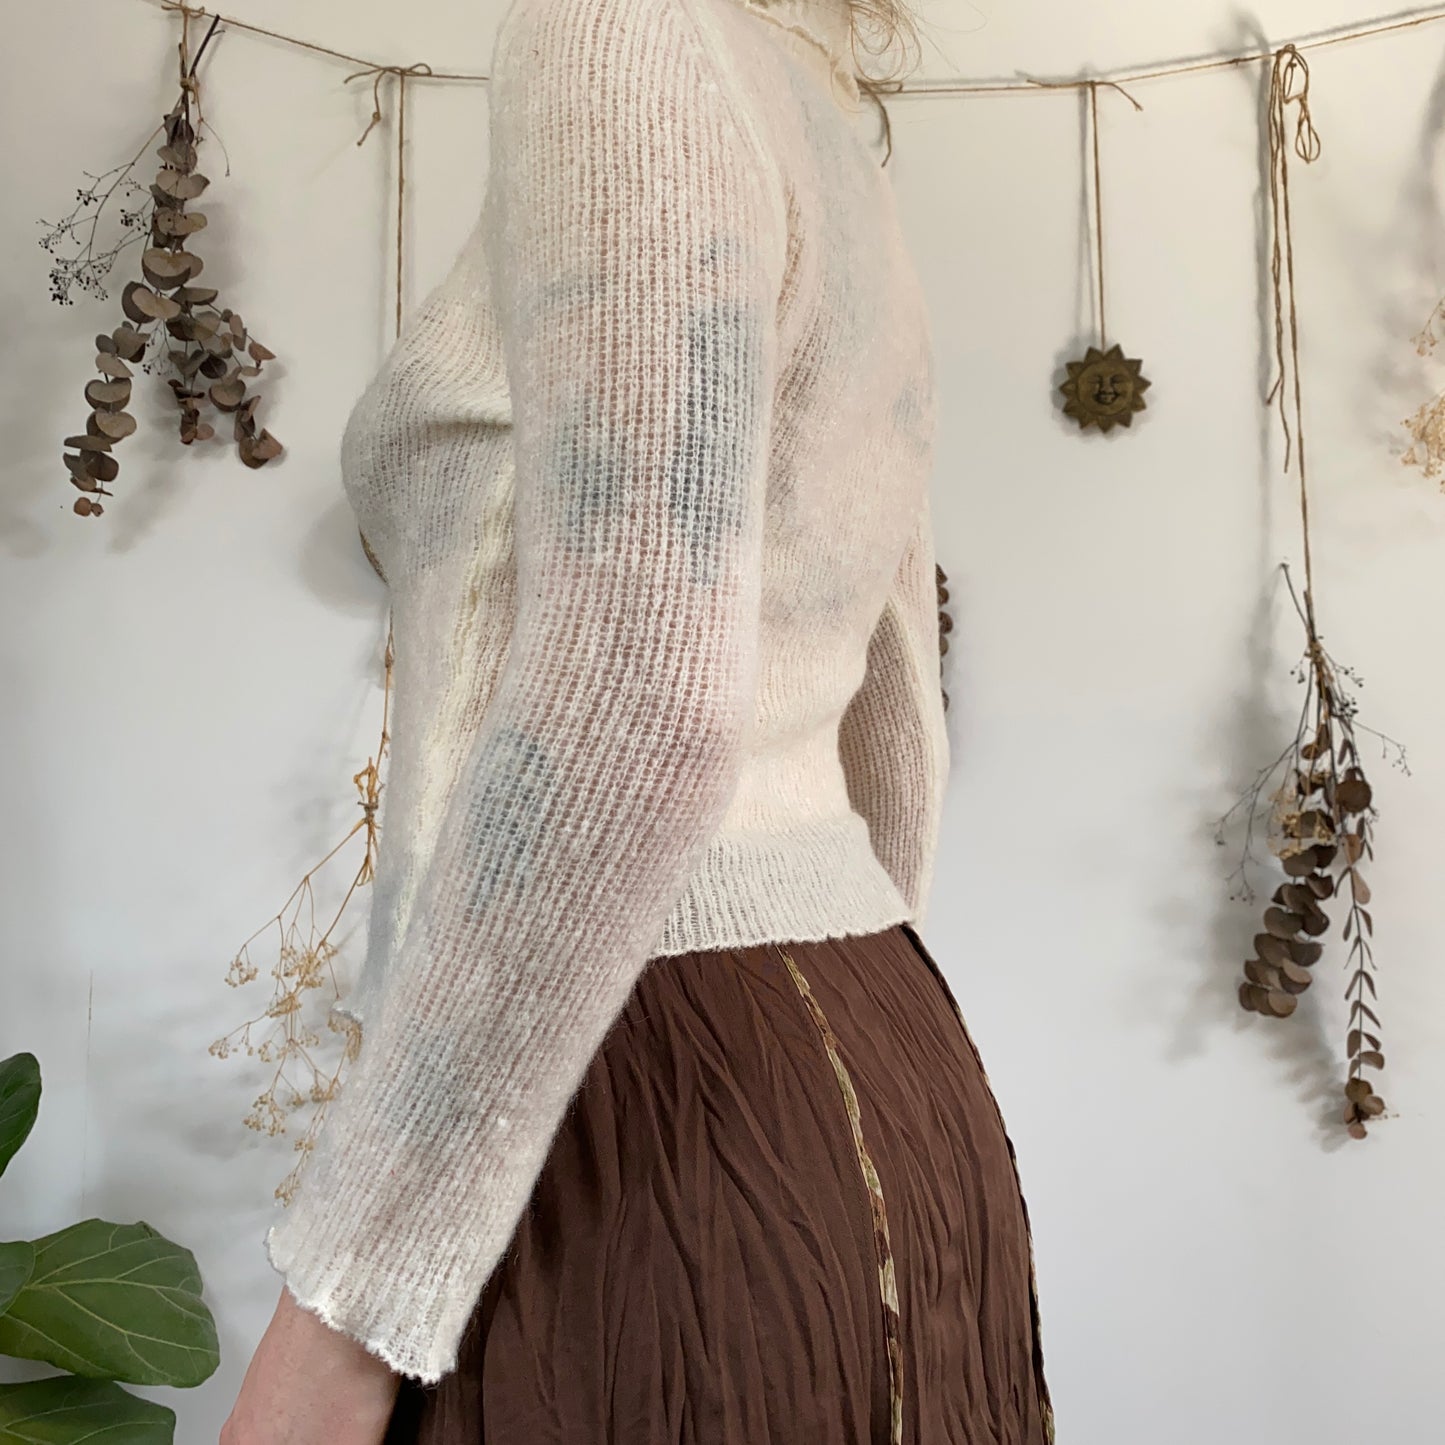 Cream knit jumper - size S/M